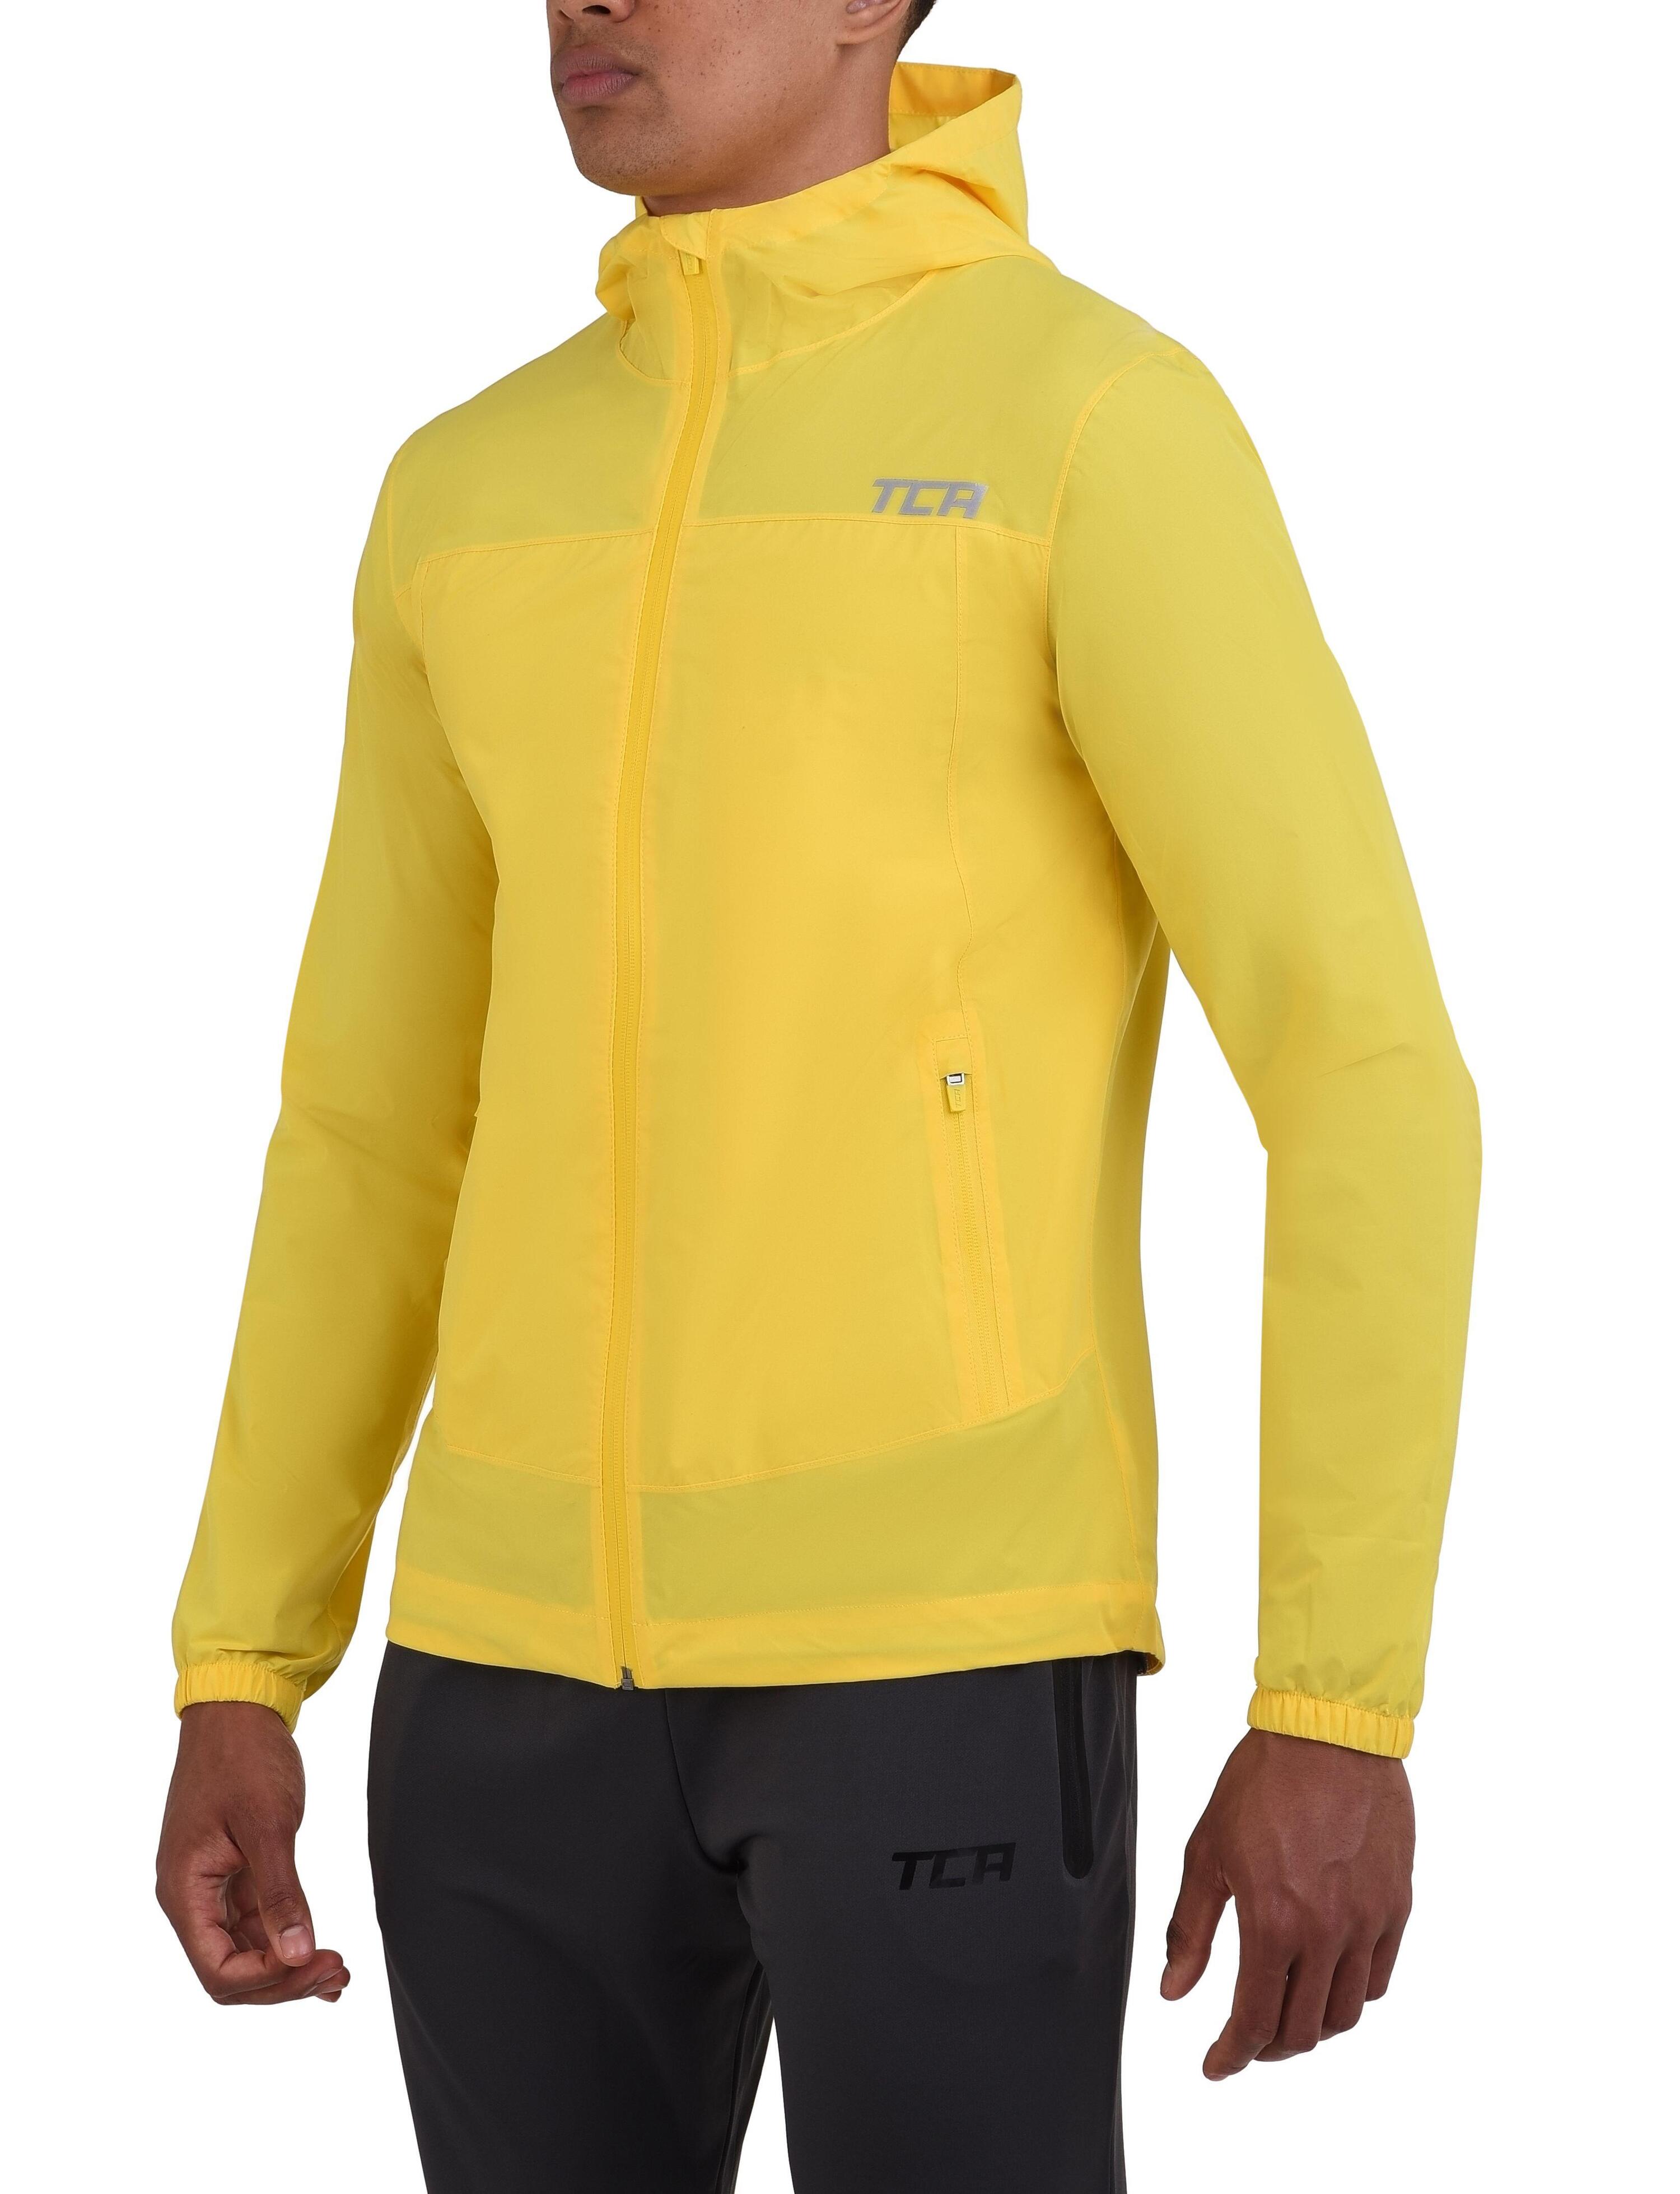 Men's AirLite Rain Jacket with Zip Pockets - Vibrant Yellow 2/5